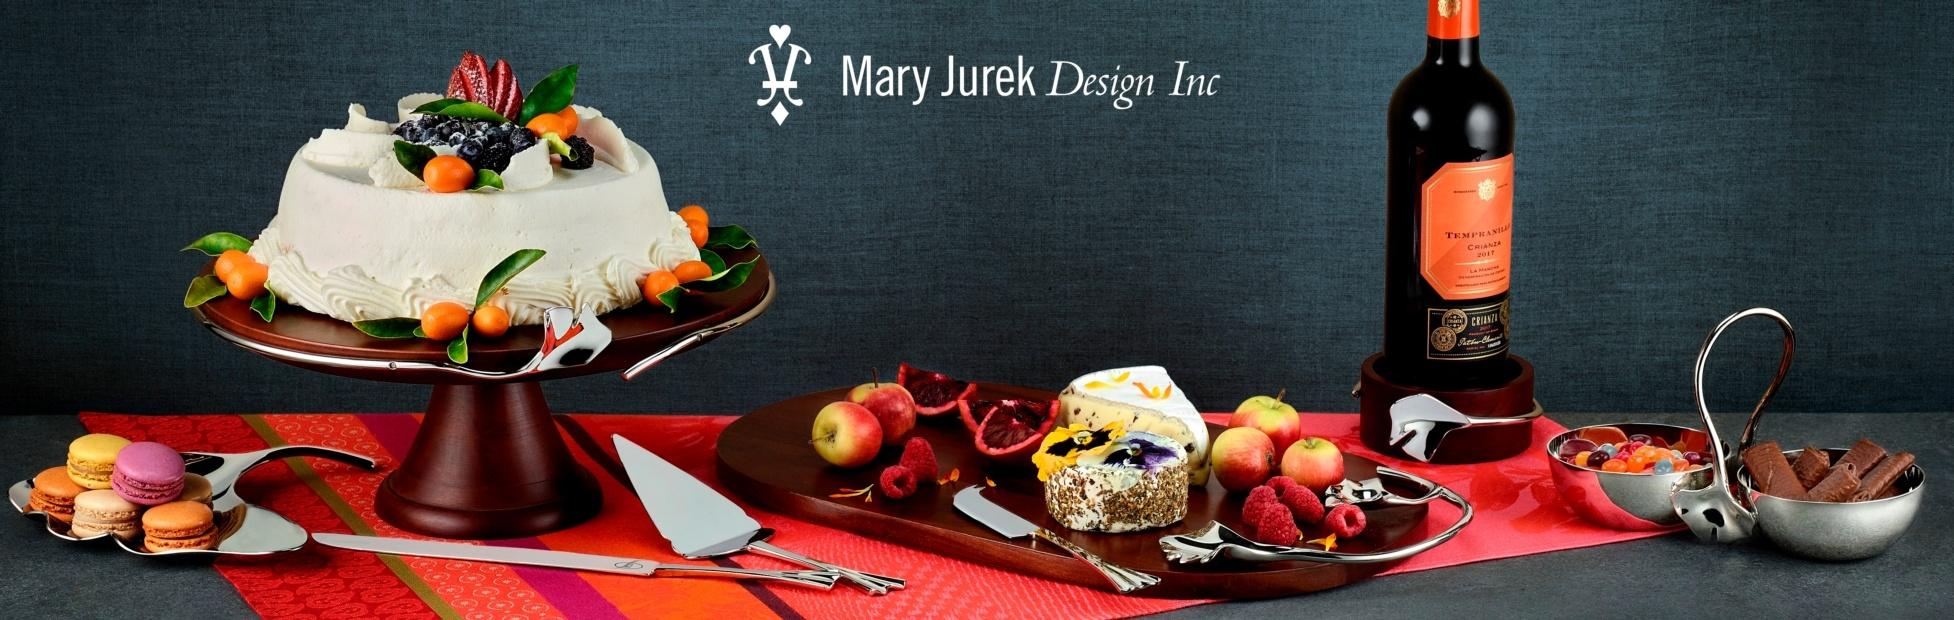 Mary Jurek lifestyle products slide 1